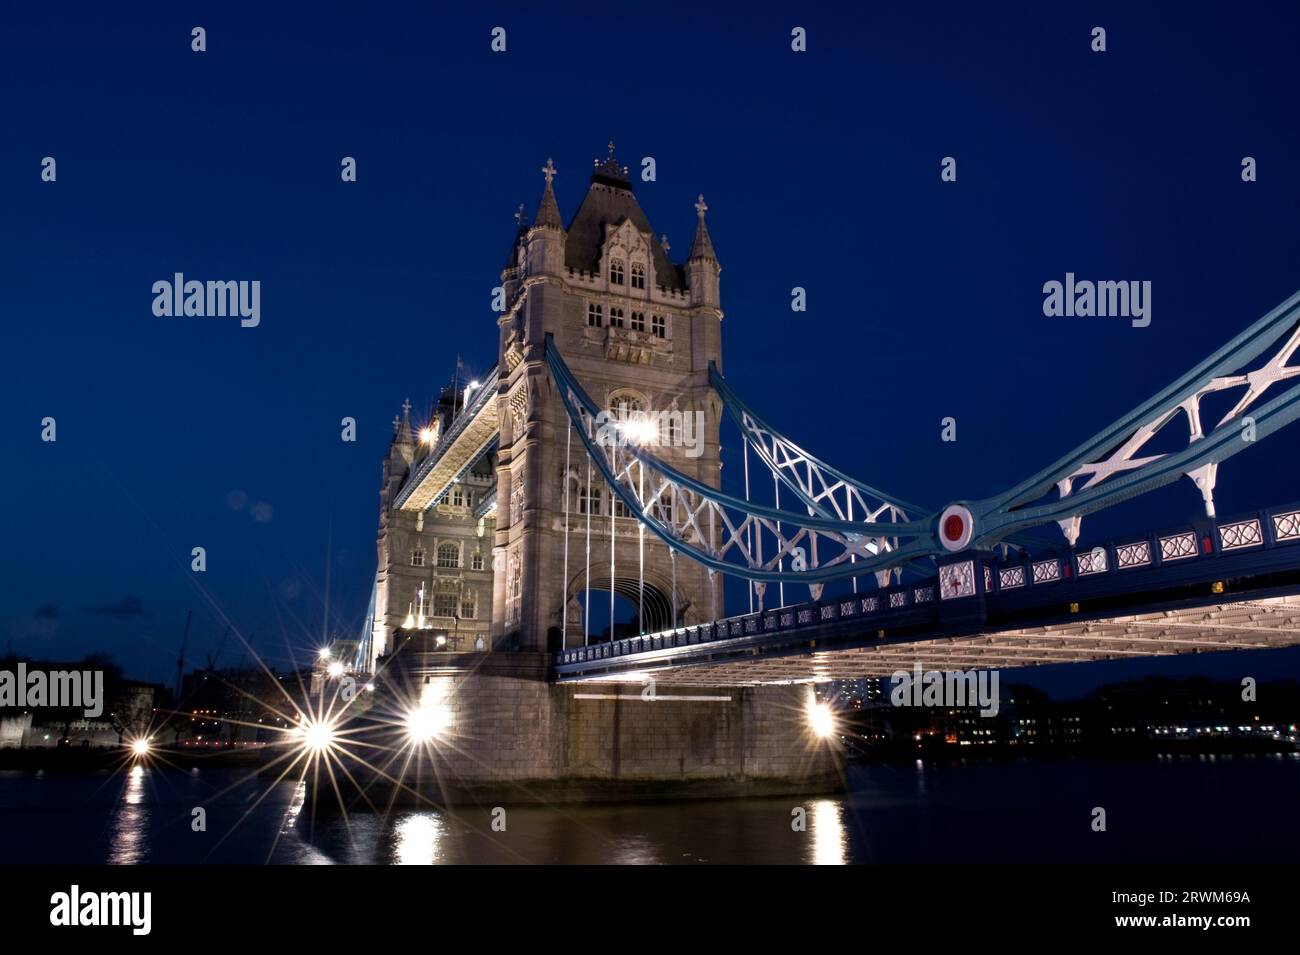 Image of Tower Bridge in London at night Stock Photo